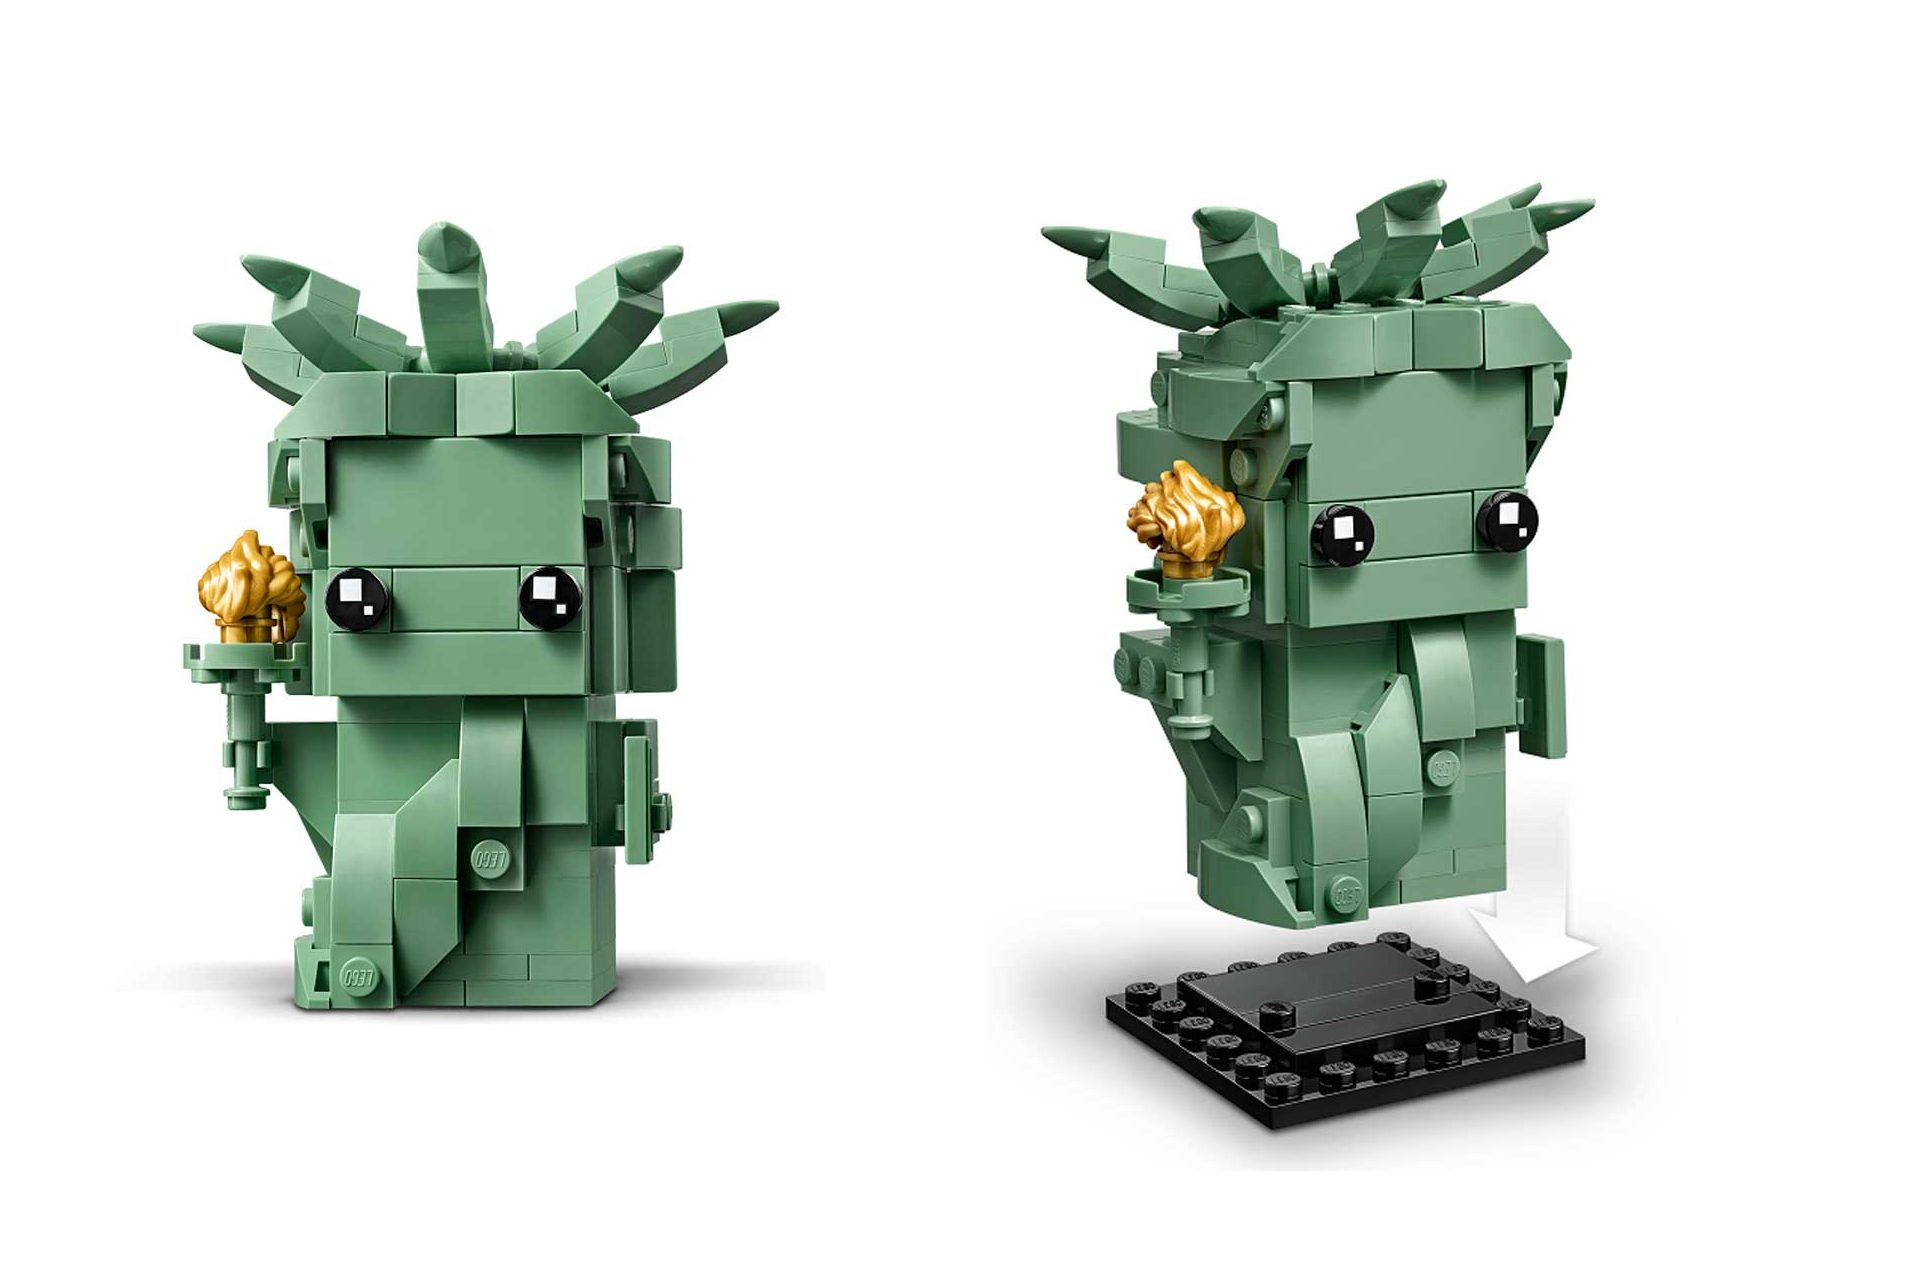 LEGO Brickheadz 40367 - Statua Della Libertà